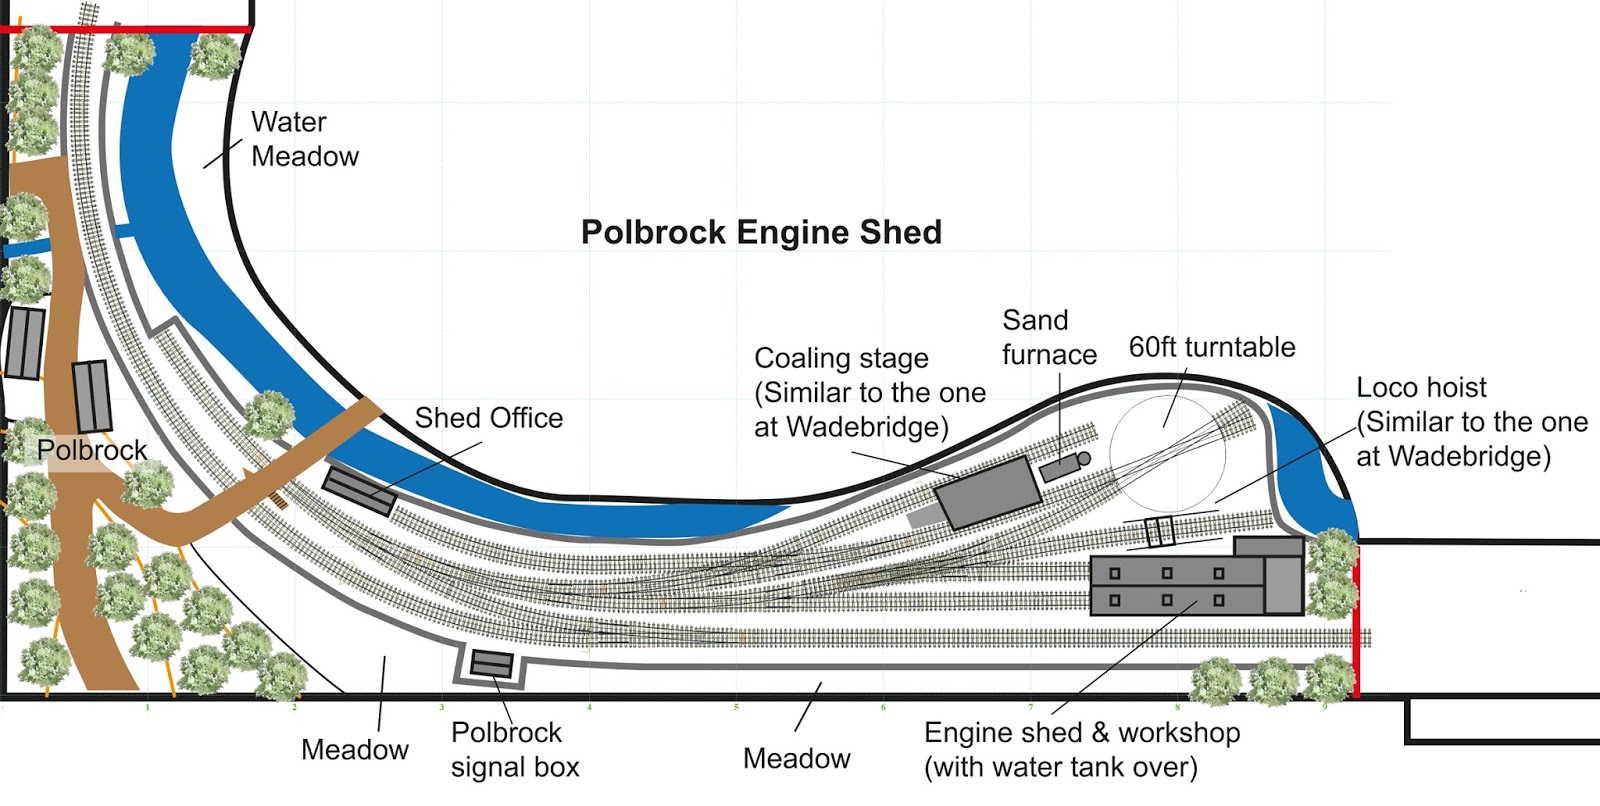 Grogley Junction: The next project - Polbrock Engine Shed?